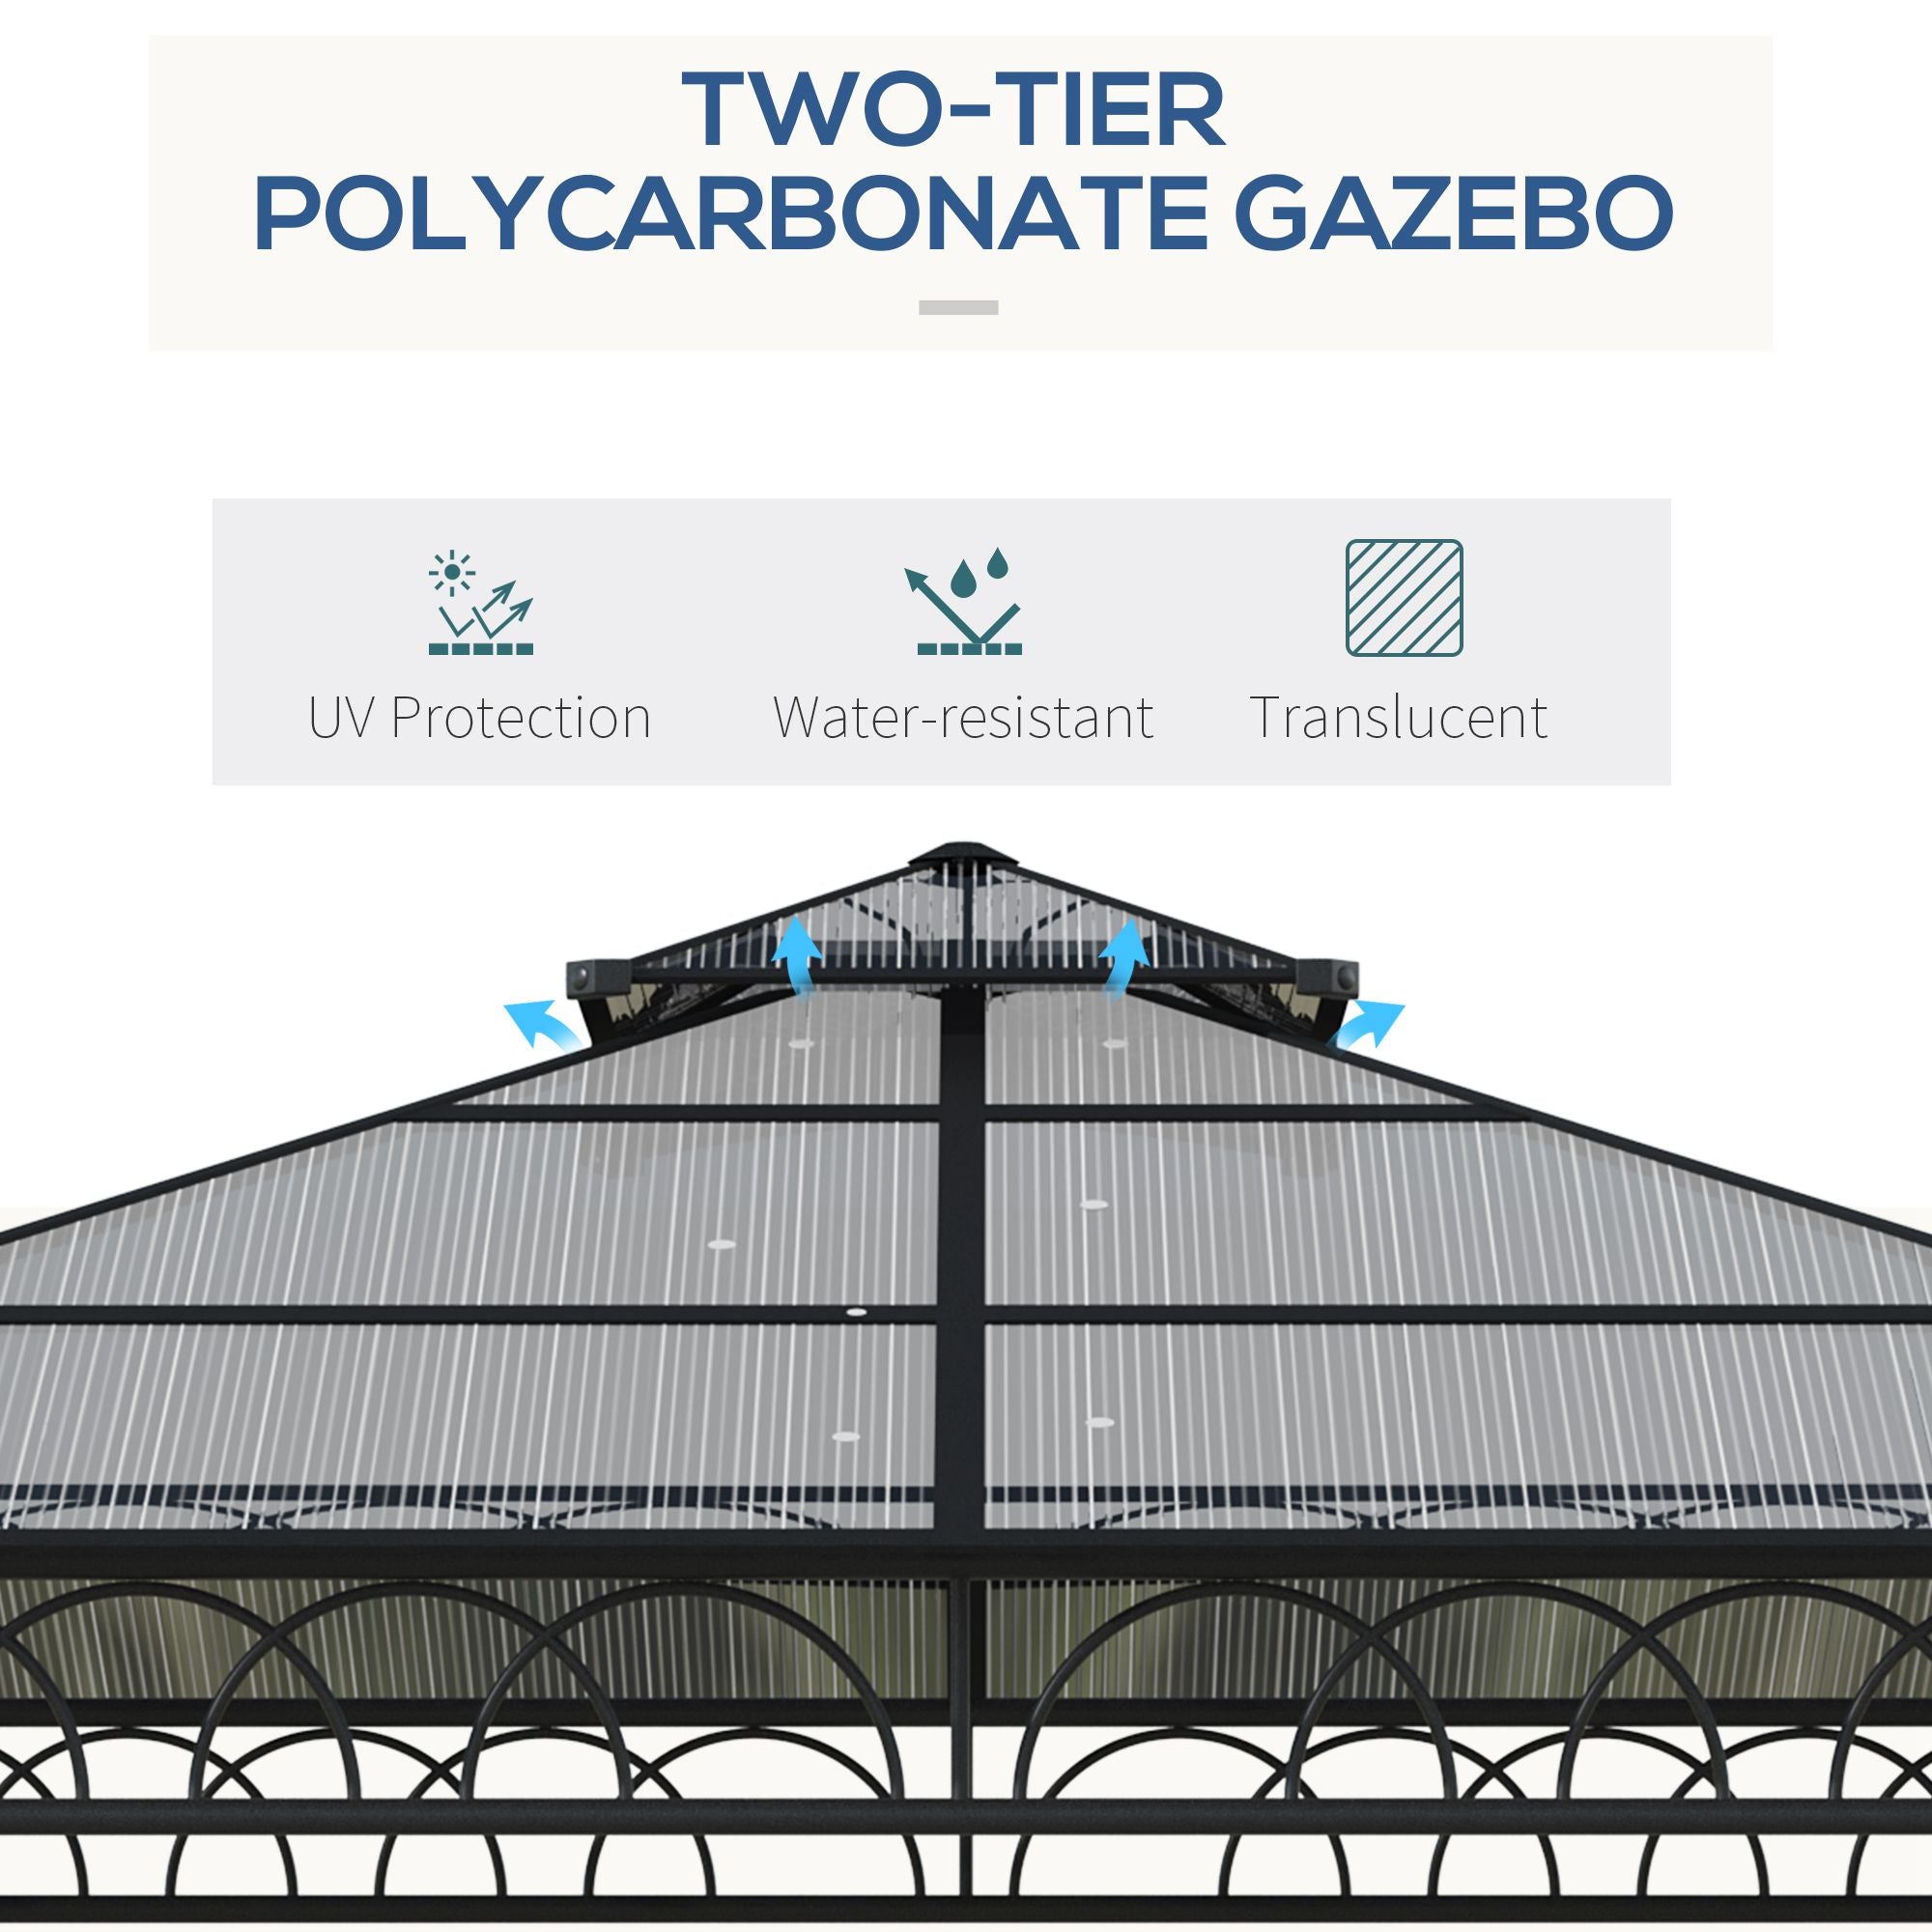 Outsunny 3 x 3 (m) Outdoor Polycarbonate Gazebo, DoubleÂ Roof Hard Top Gazebo withÂ Galvanized Steel Frame, NettingsÂ &Â Curtains